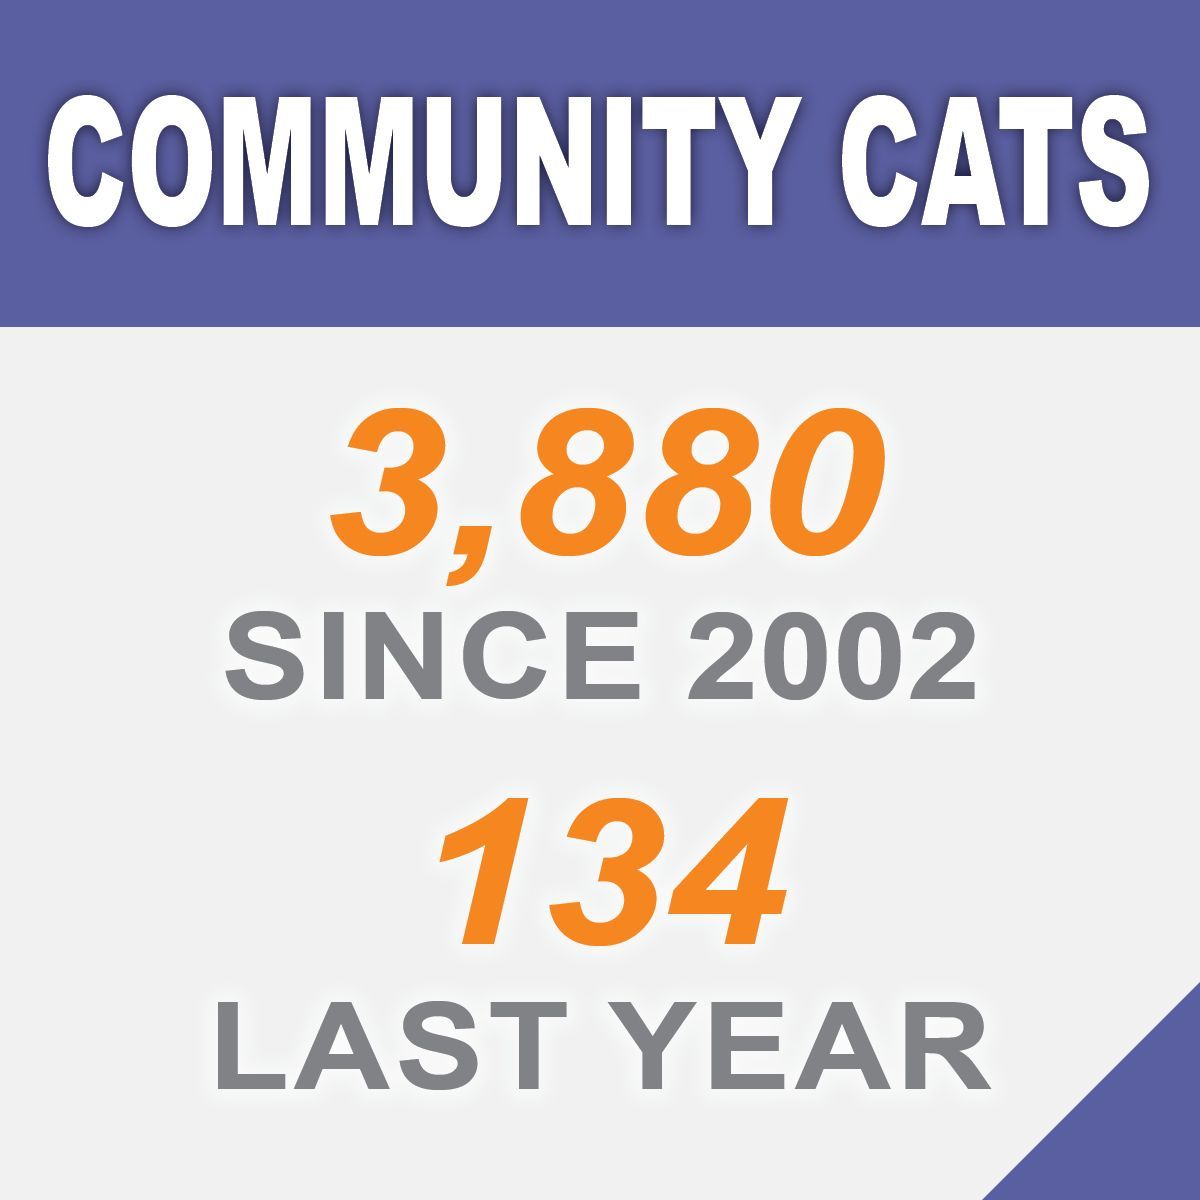 Community Cats